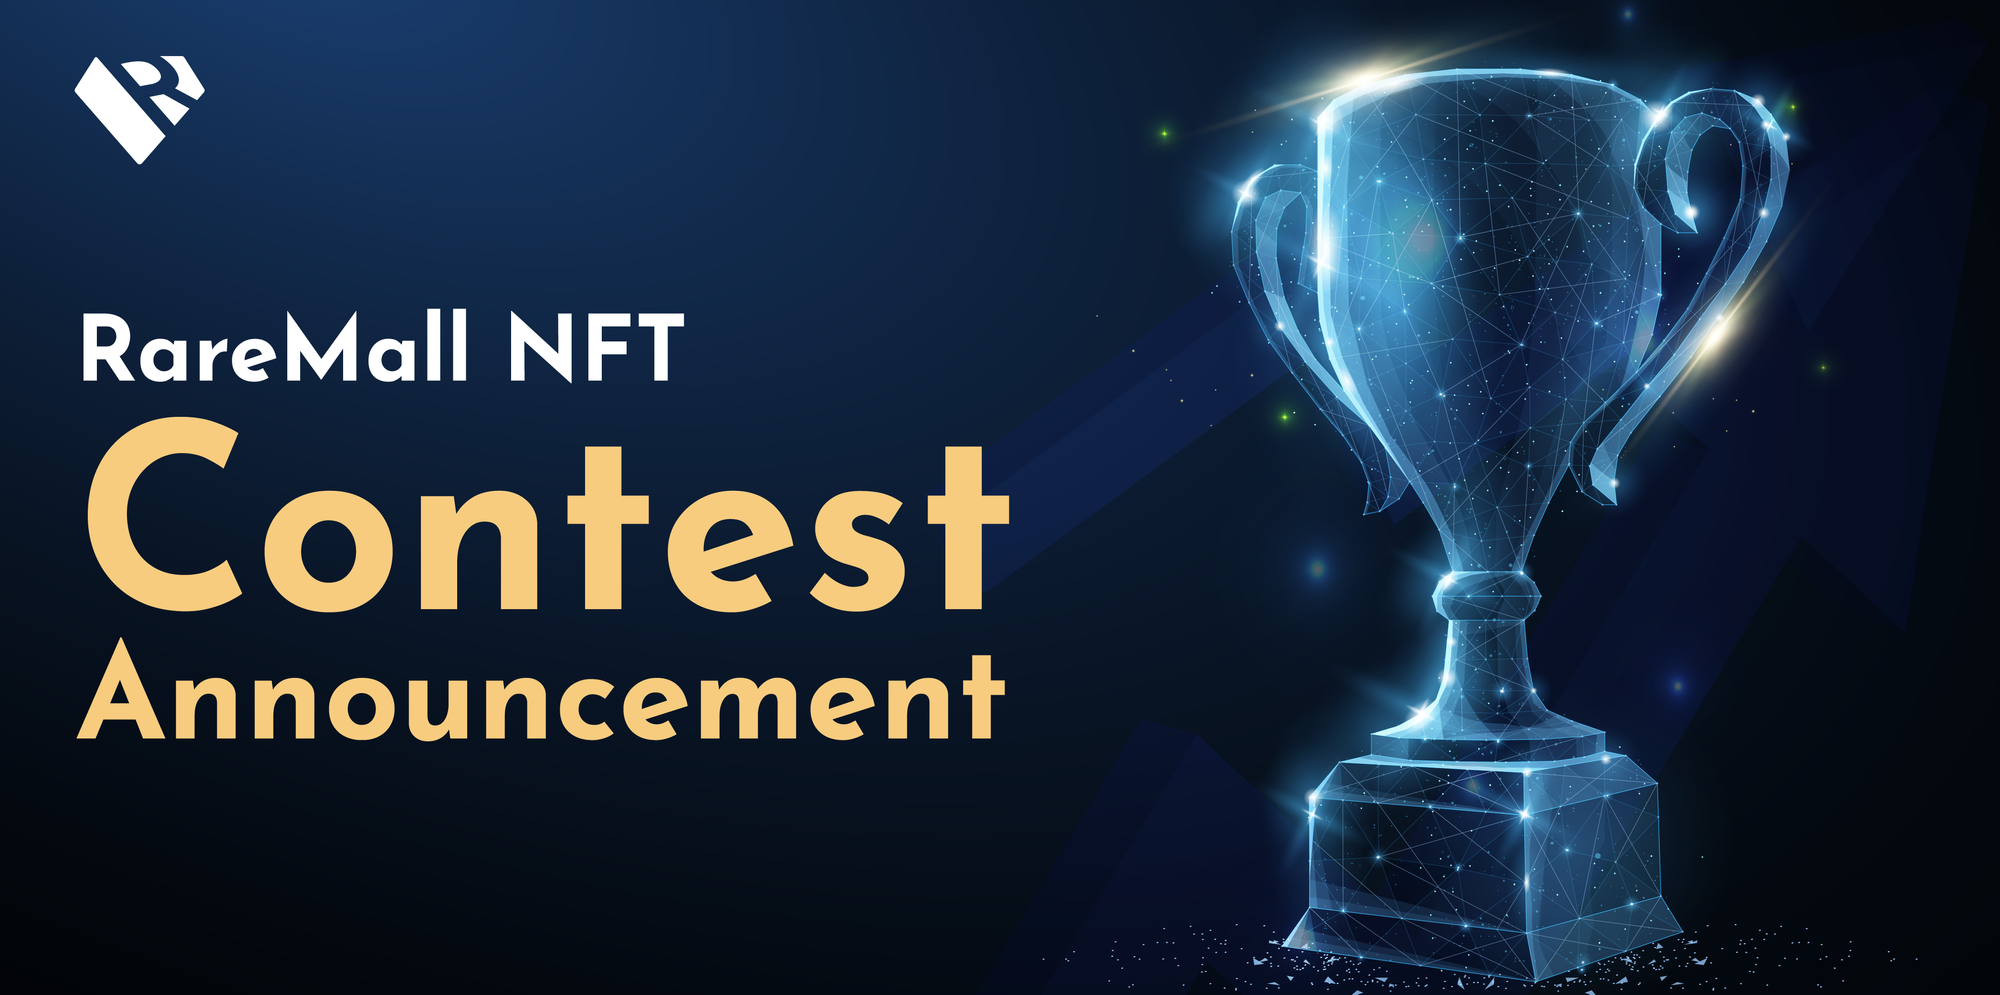 RareMall NFT Contest 2021: #NFTUntoldStories